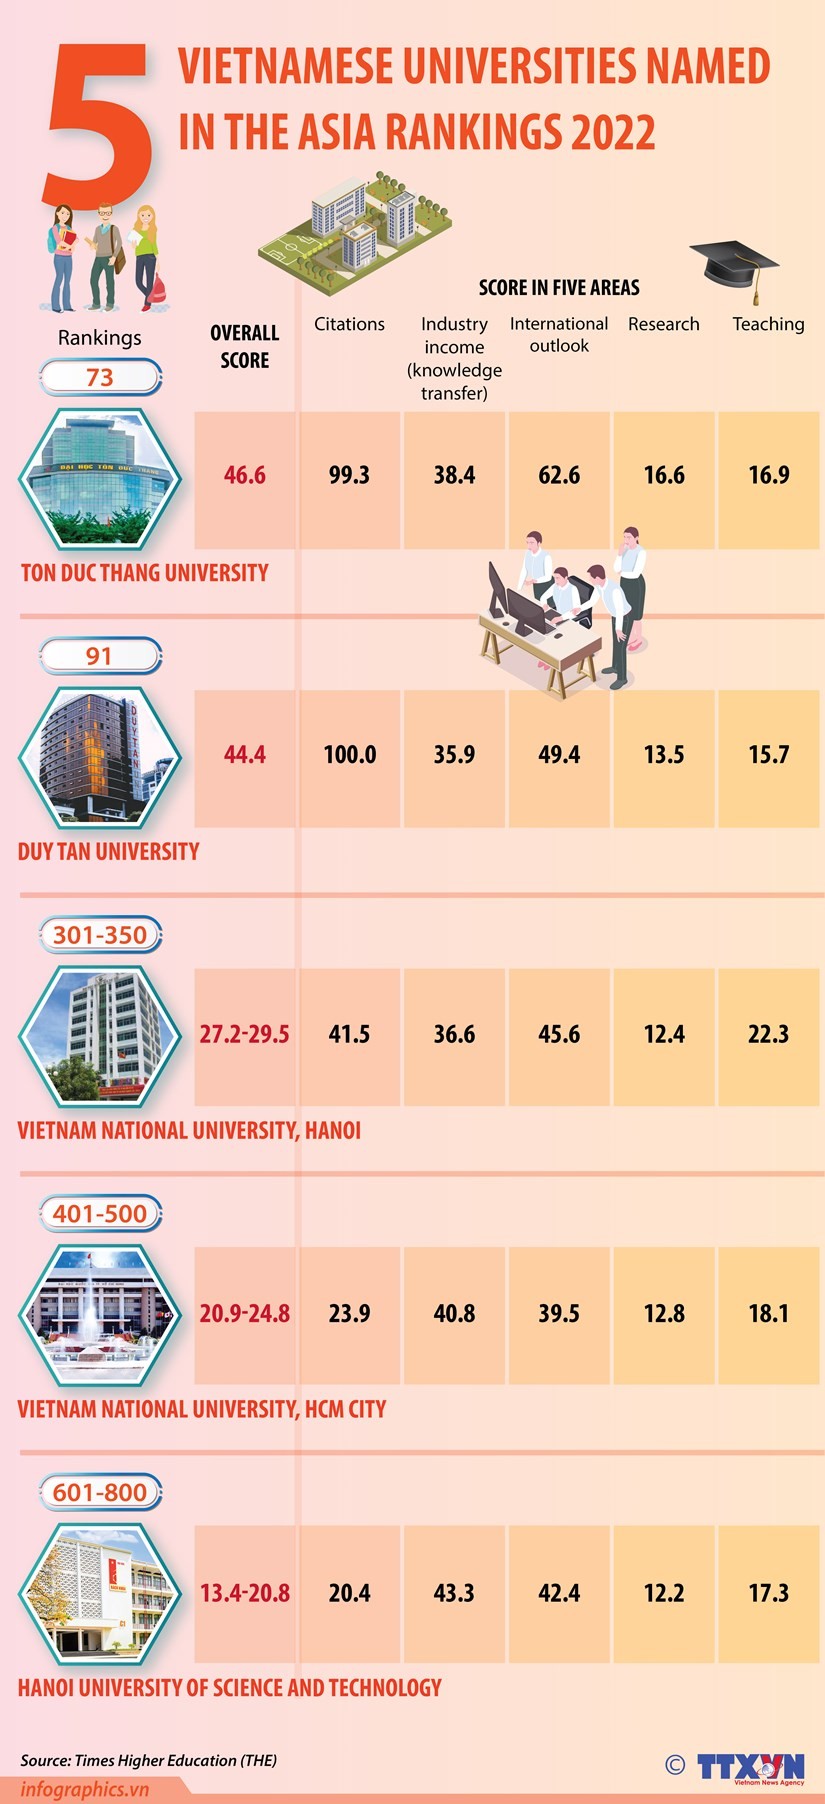 Five Vietnamese universities named in THE Asia rankings 2022